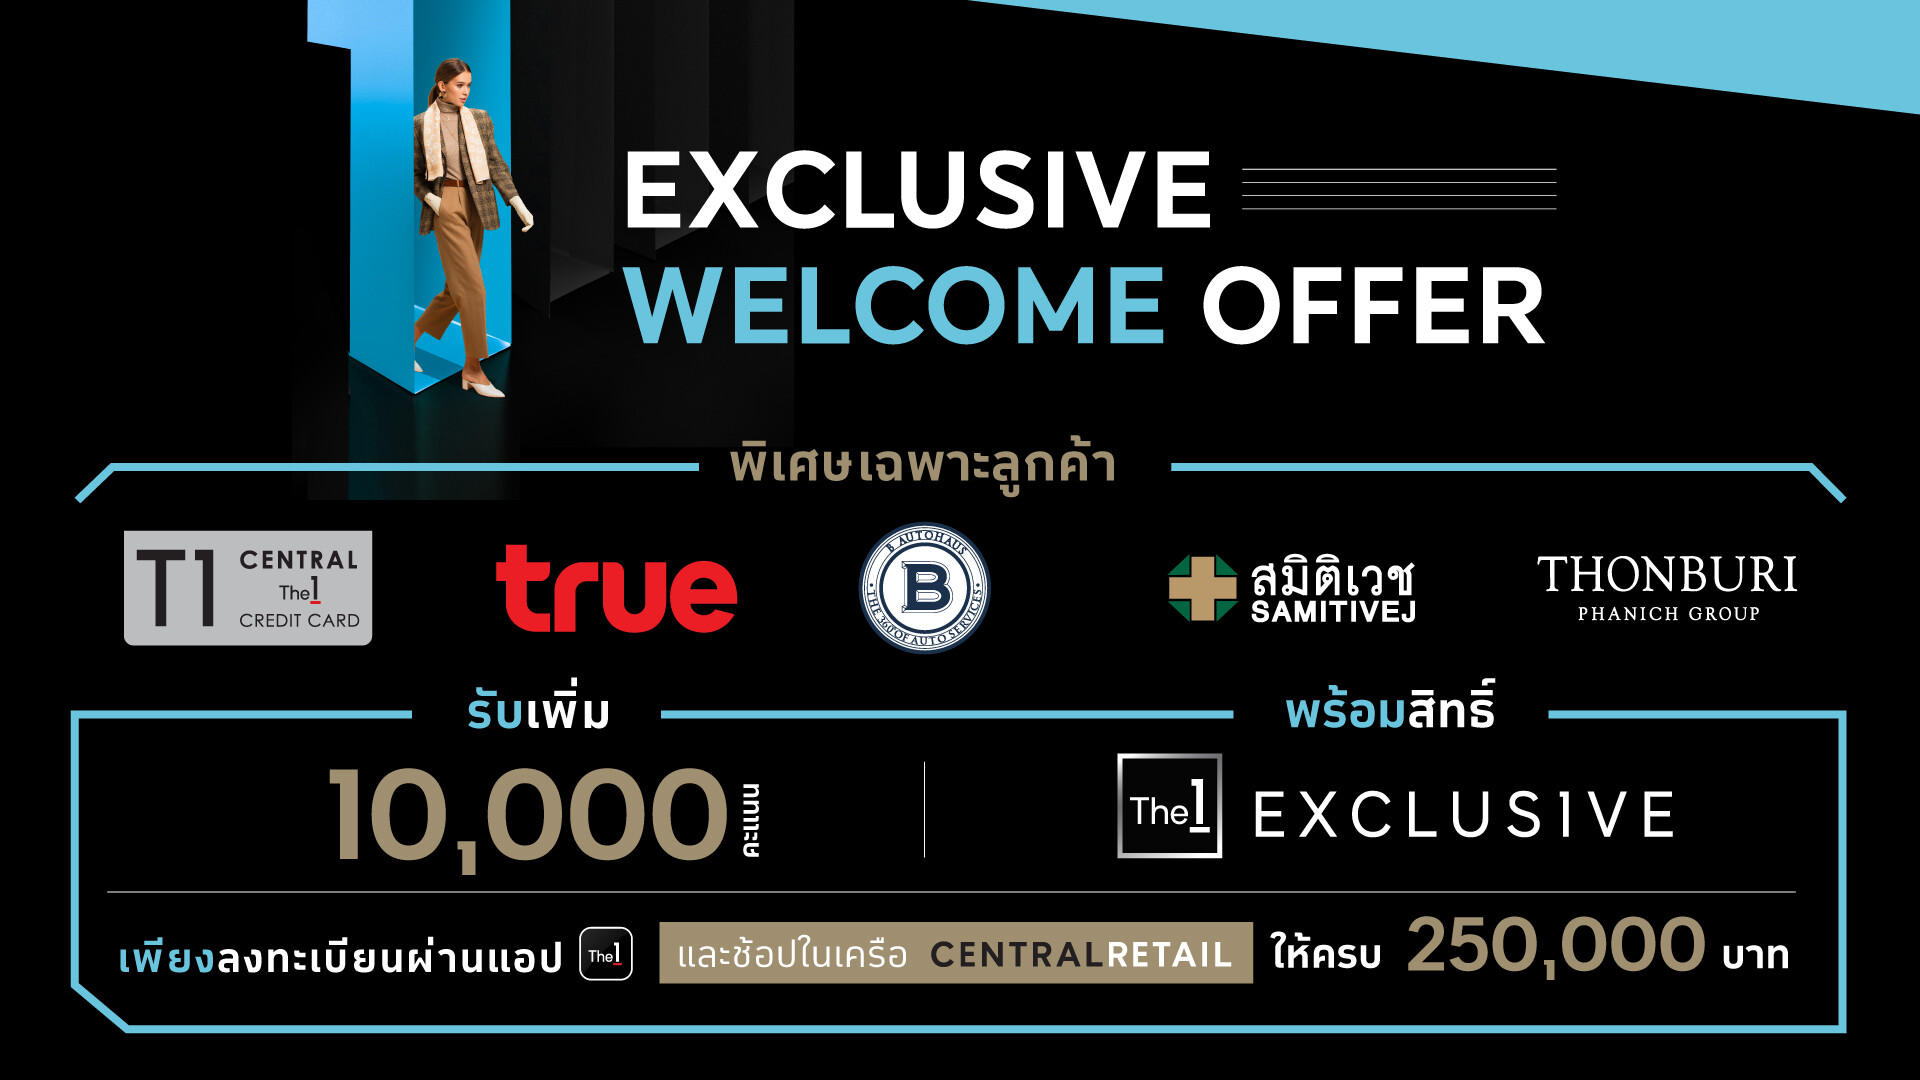 The 1 Exclusive จับมือ 5 แบรนด์ชั้นนำของไทย ปล่อยแคมเปญ "Exclusive Welcome Offer" มอบ 10,000 คะแนน on-top พร้อมเสนอสิทธิประโยชน์สูงสุดเพื่อสมาชิกคนพิเศษ